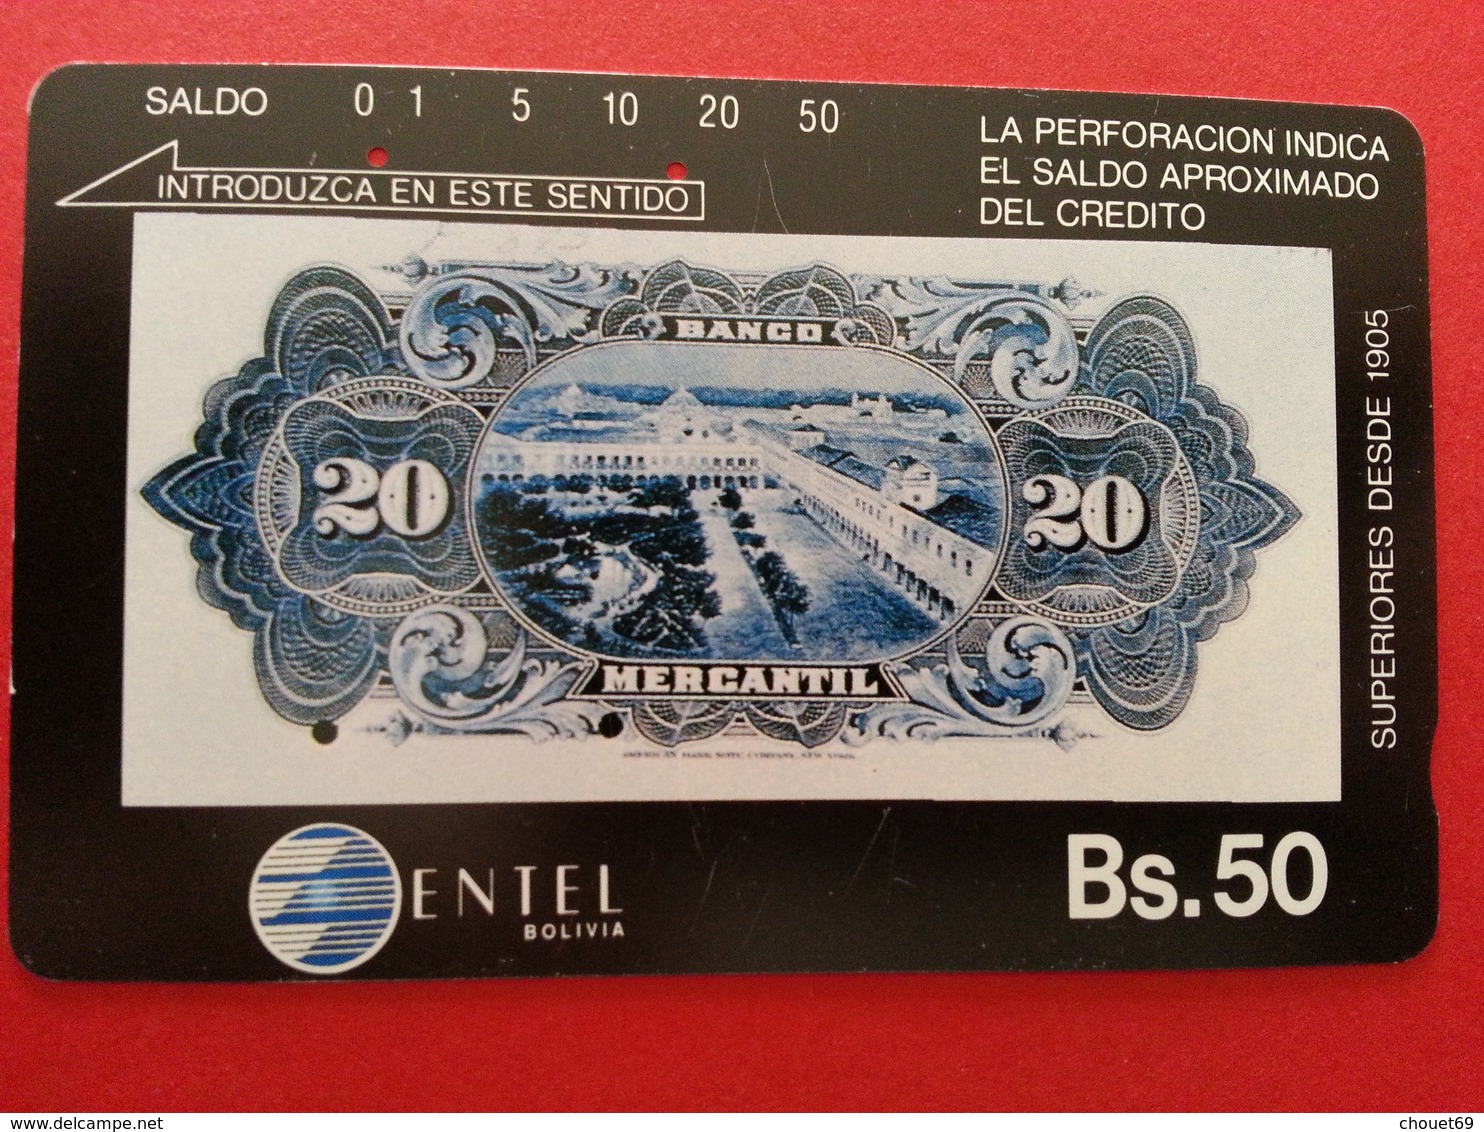 BOLIVIA Tamura - 20 Bolivianos Banknote Entel Telecard Bs.50 - Bolivie - Normal Used (CB1217) - Bolivie